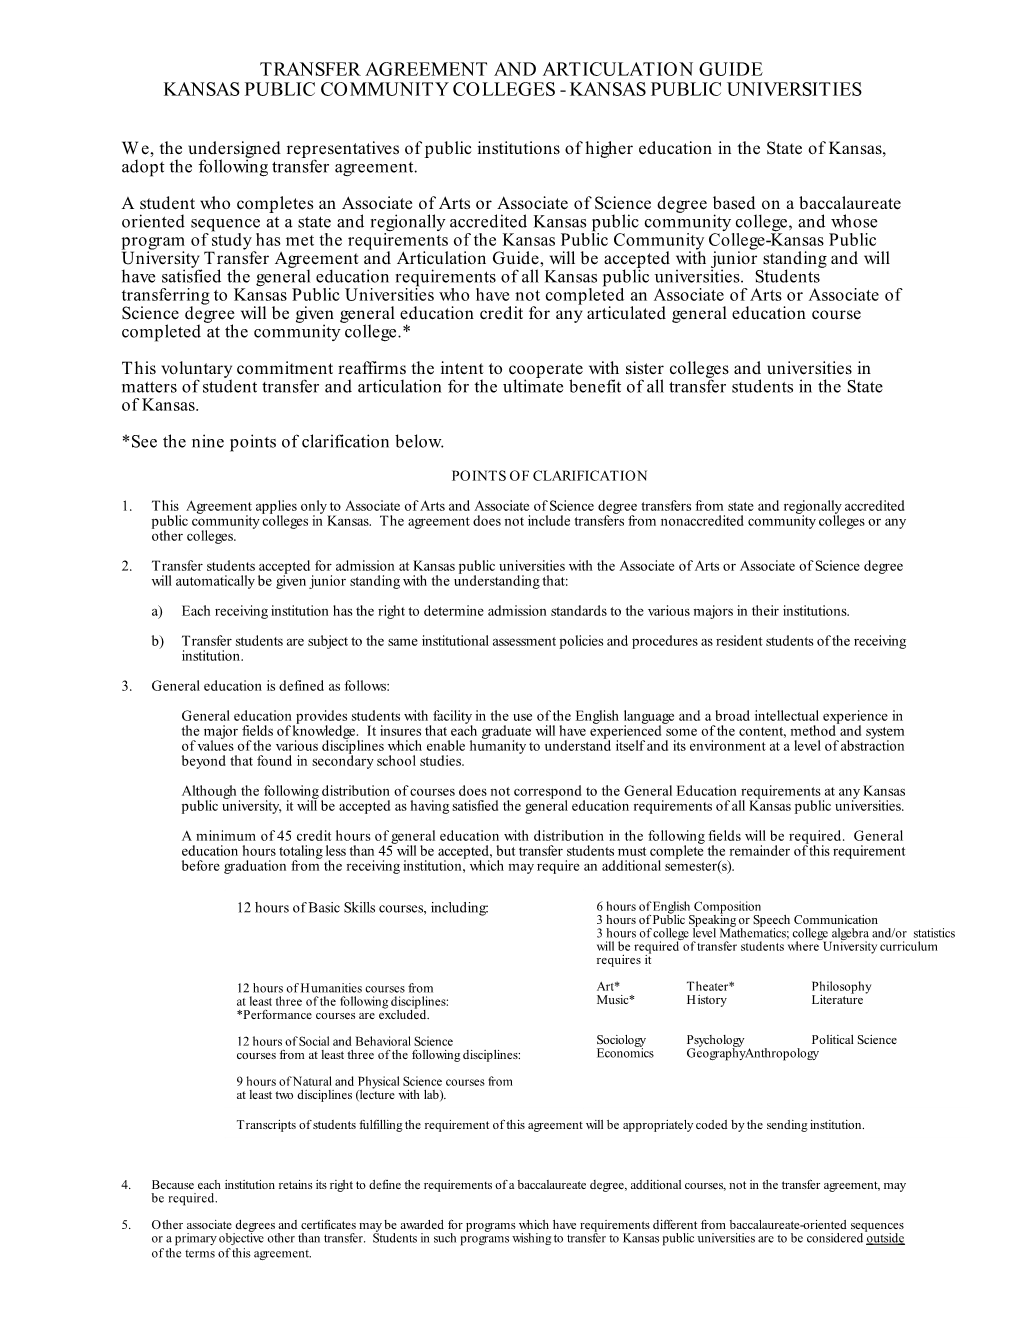 Transfer Agreement and Articulation Guide Kansas Public Community Colleges - Kansas Public Universities